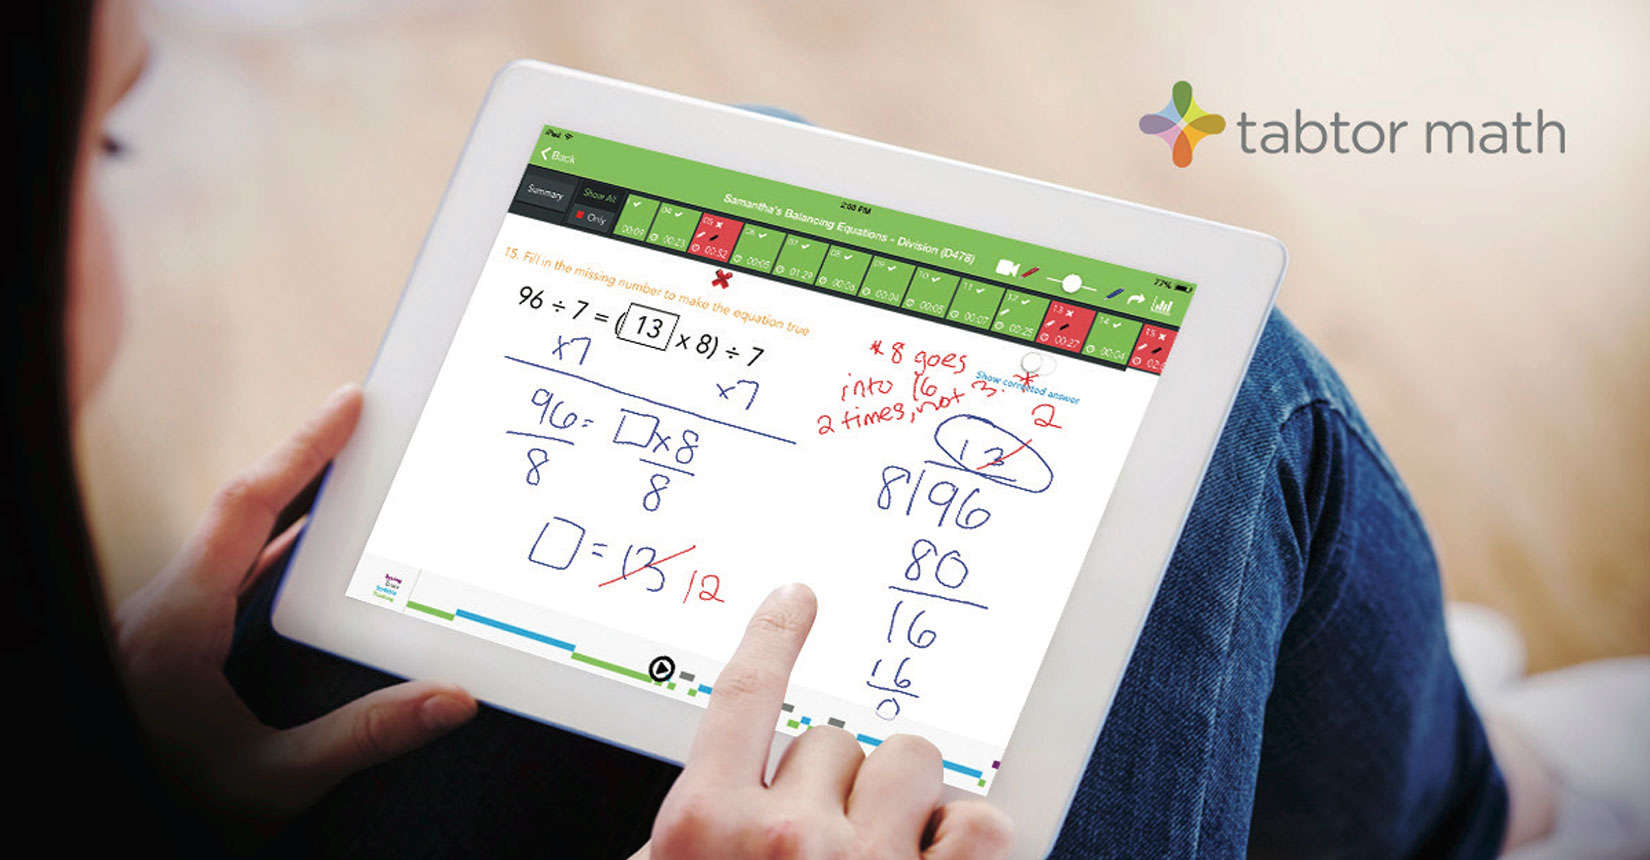 iPad math app comes with real human tutor | Cult of Mac